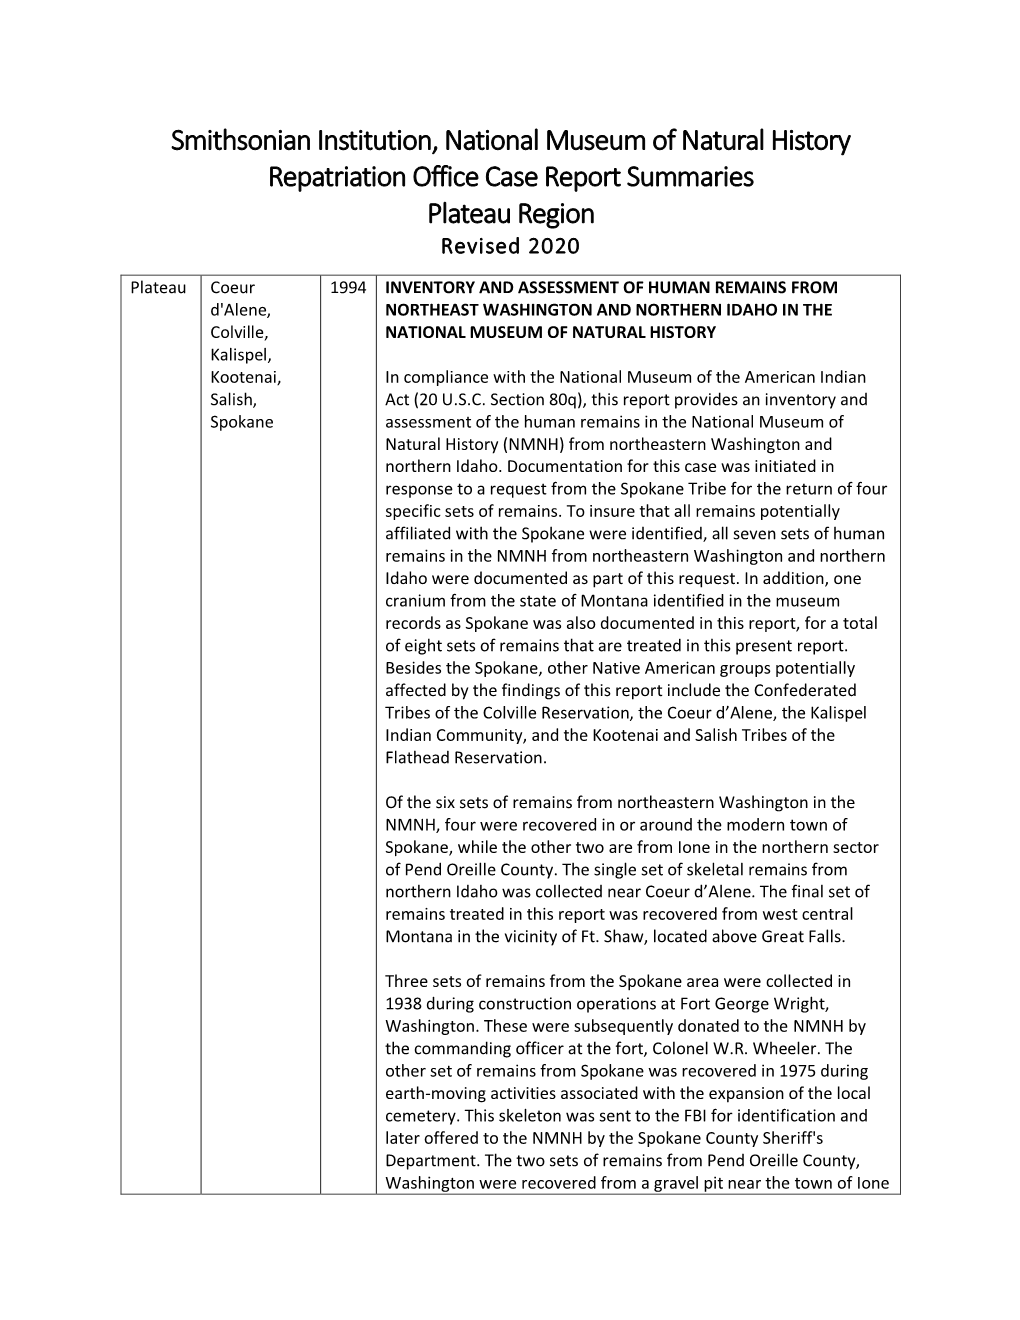 Repatriation Office Case Report Summaries Plateau Region 2020